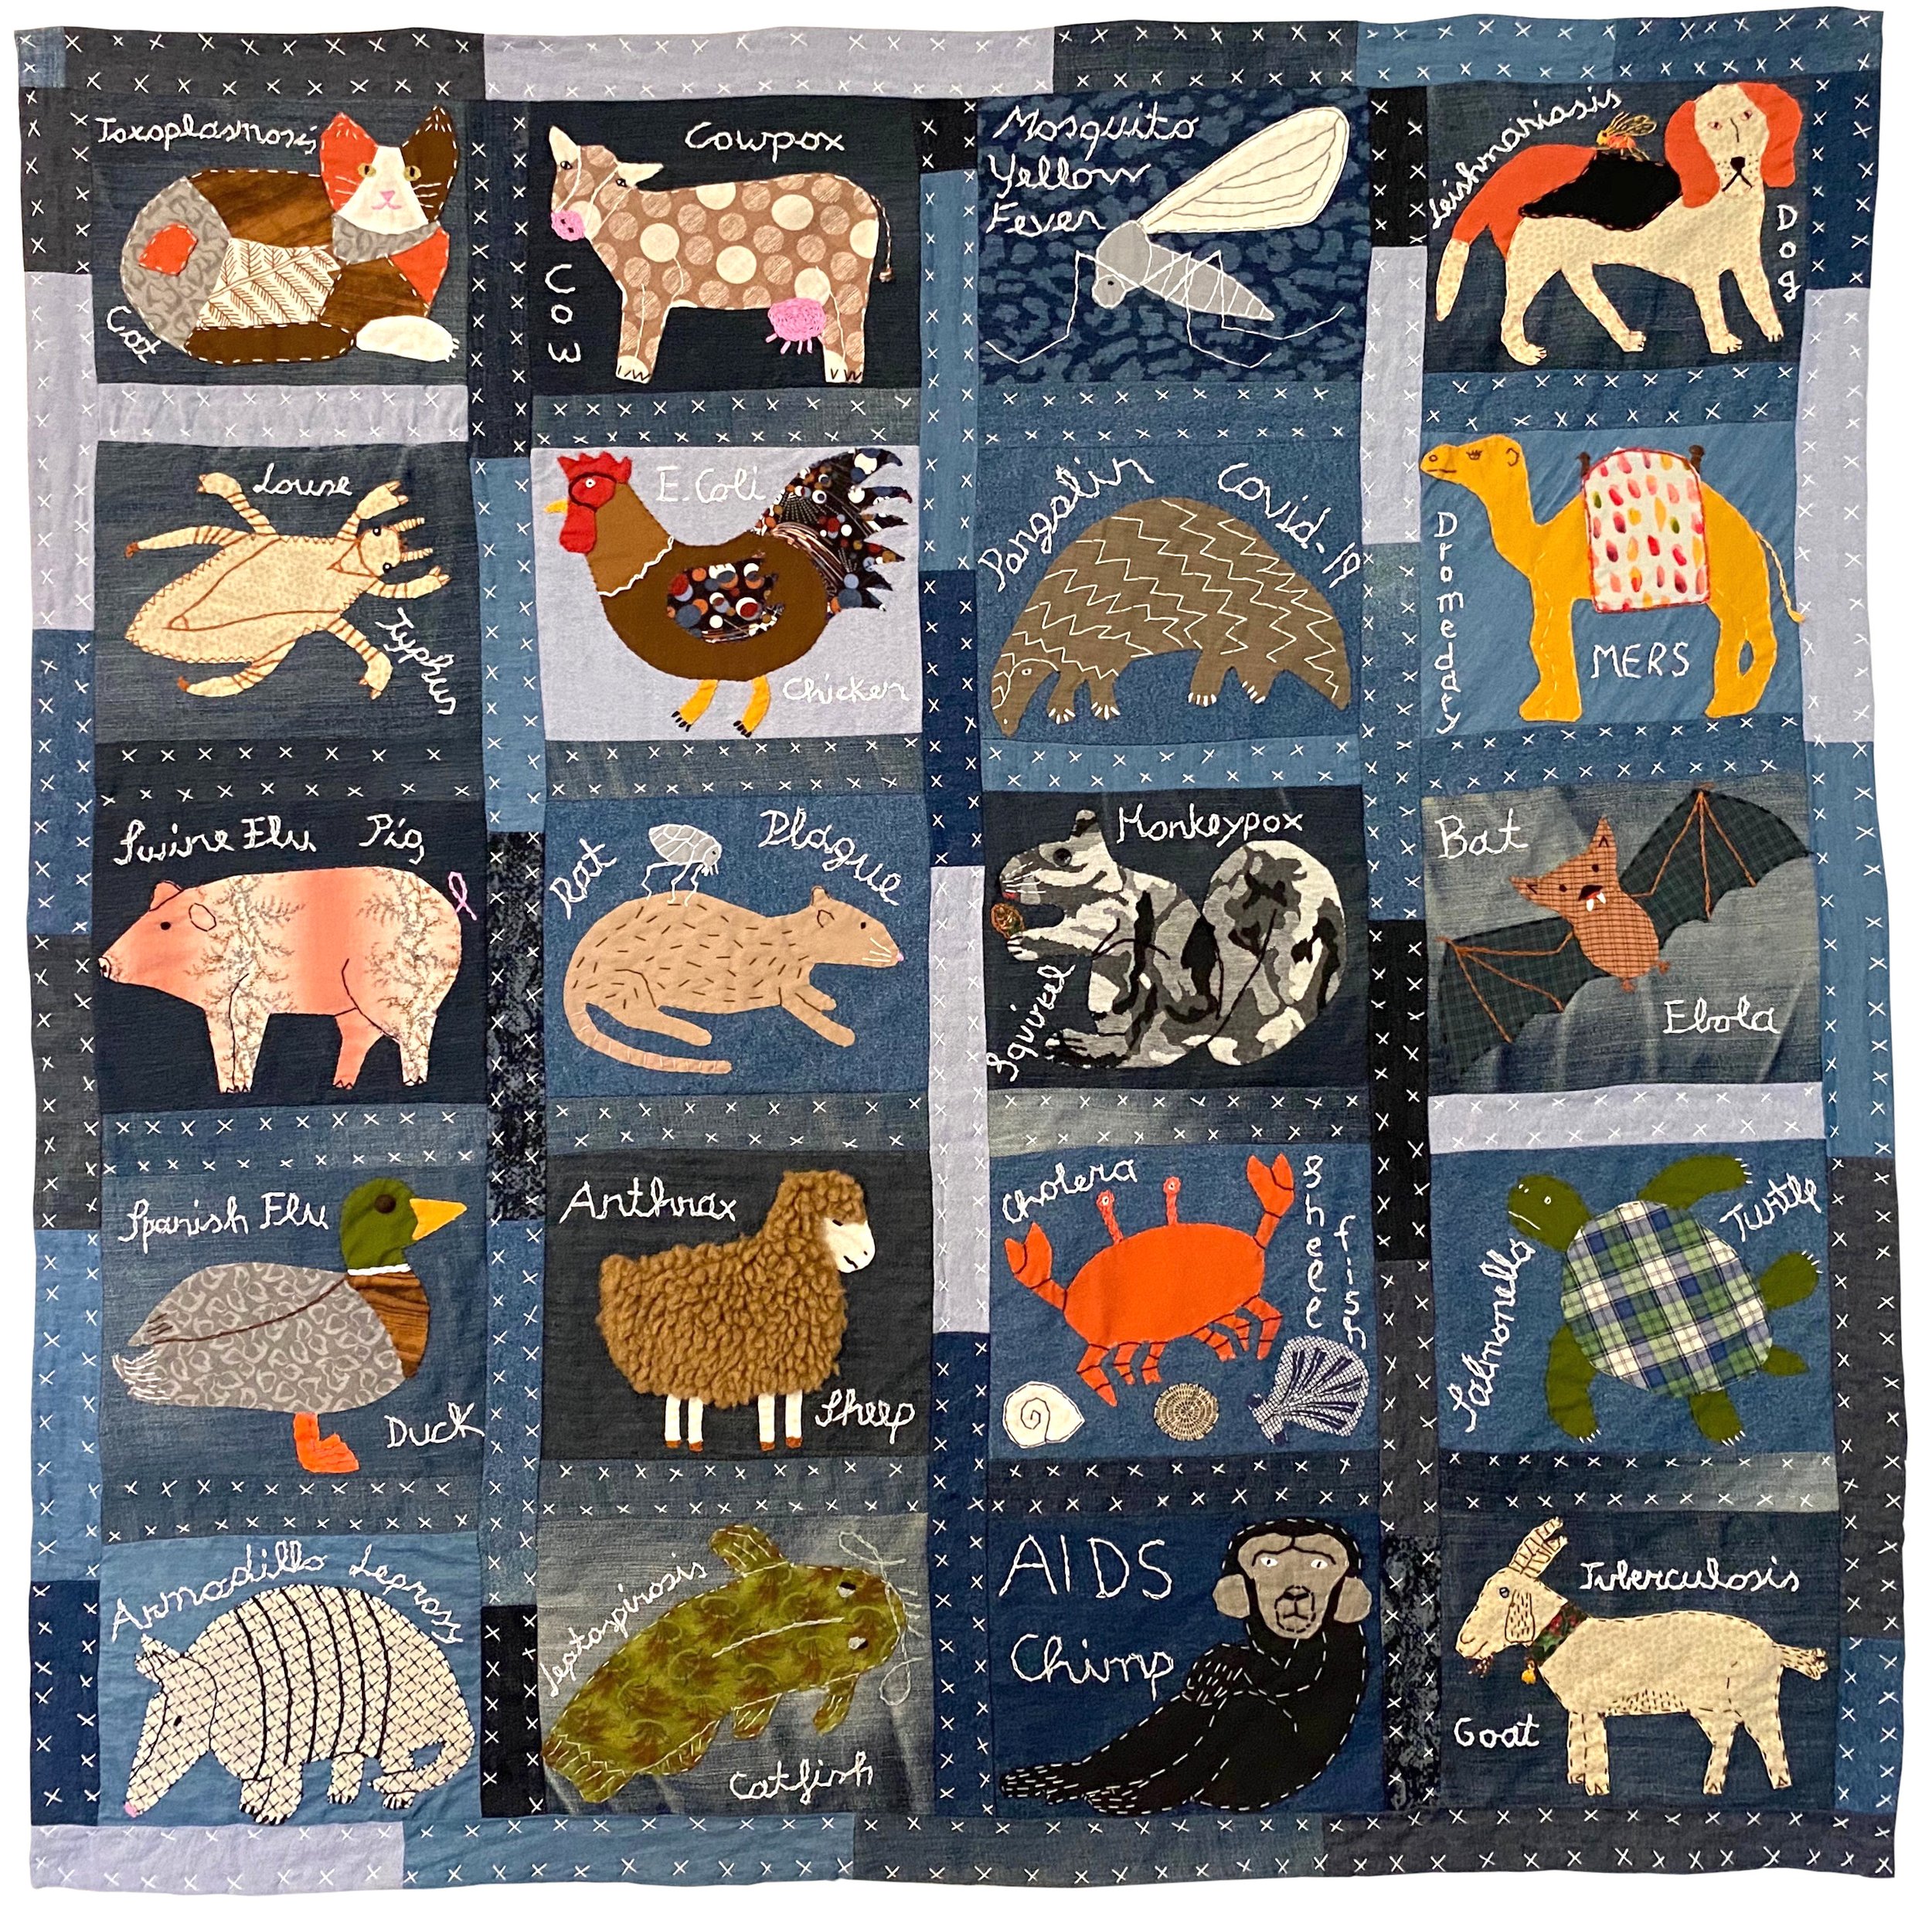  Sabine Heinlein "Zoonotic Disease Quilt" / 2020 / recycled textiles / 45” x 45” / $3,000 